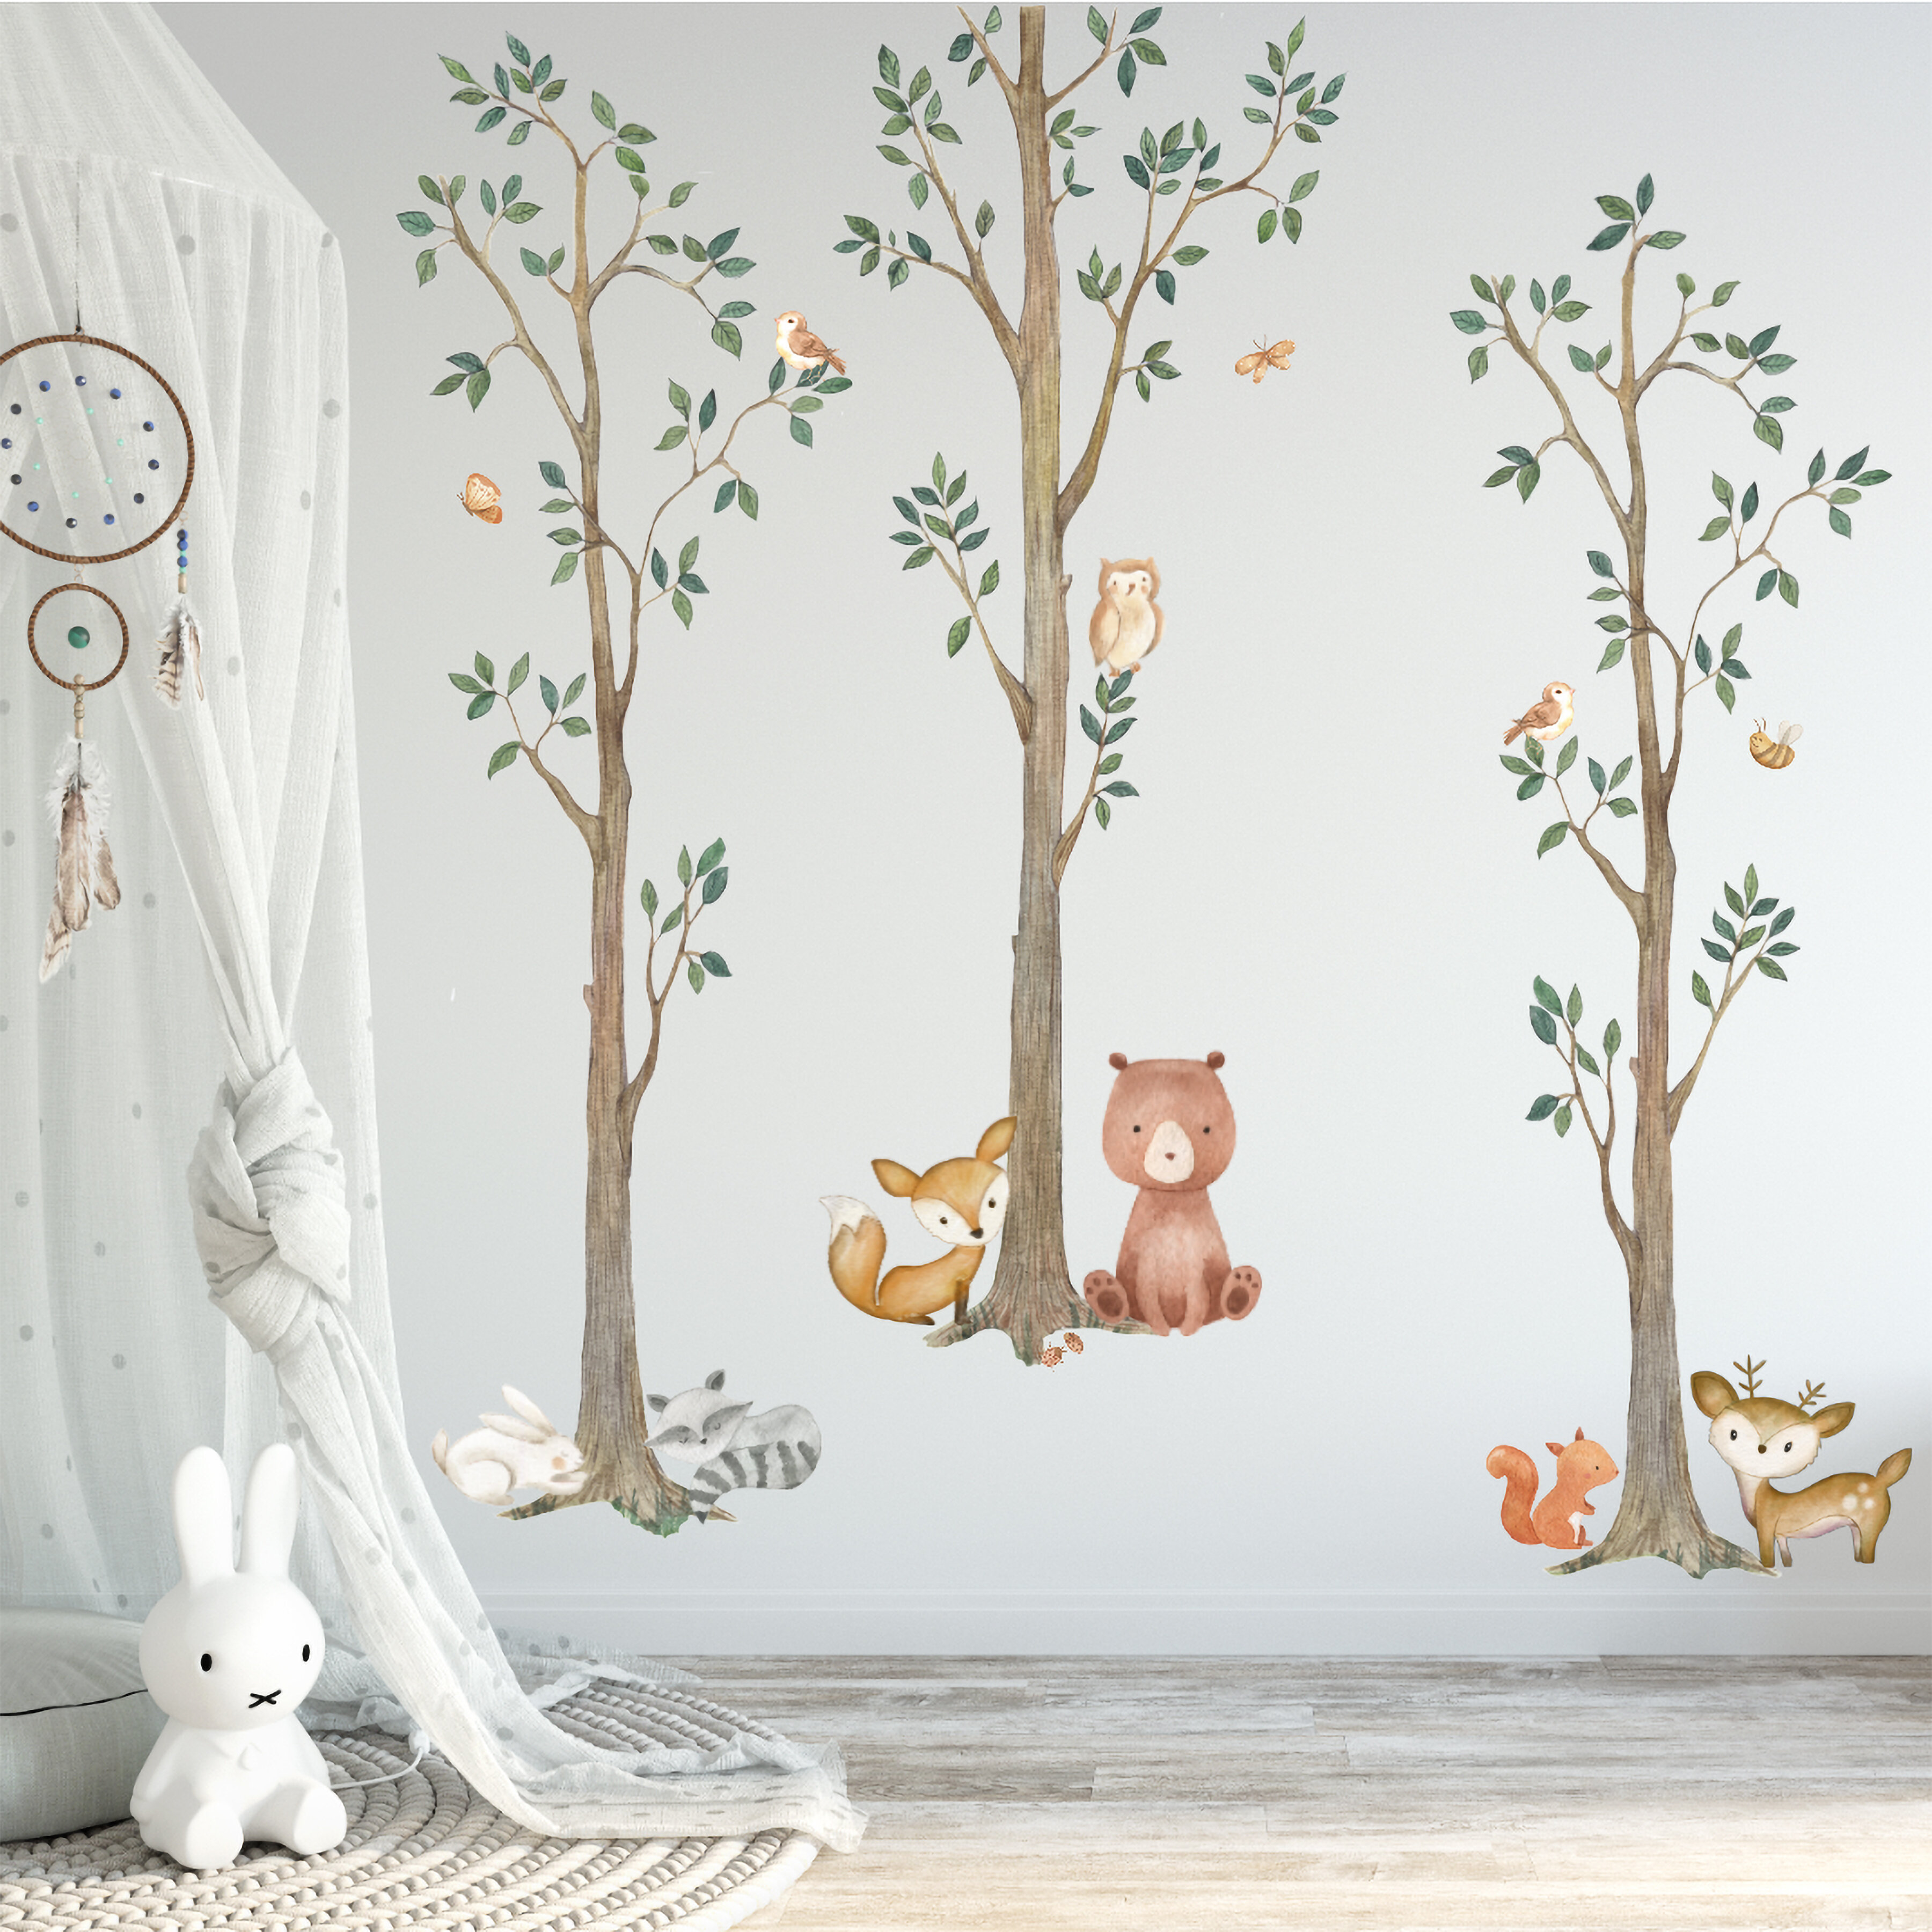 Removabl Owl Swing Flower Tree Wall decal Kids Nursery  Stickers Decor Art Large 